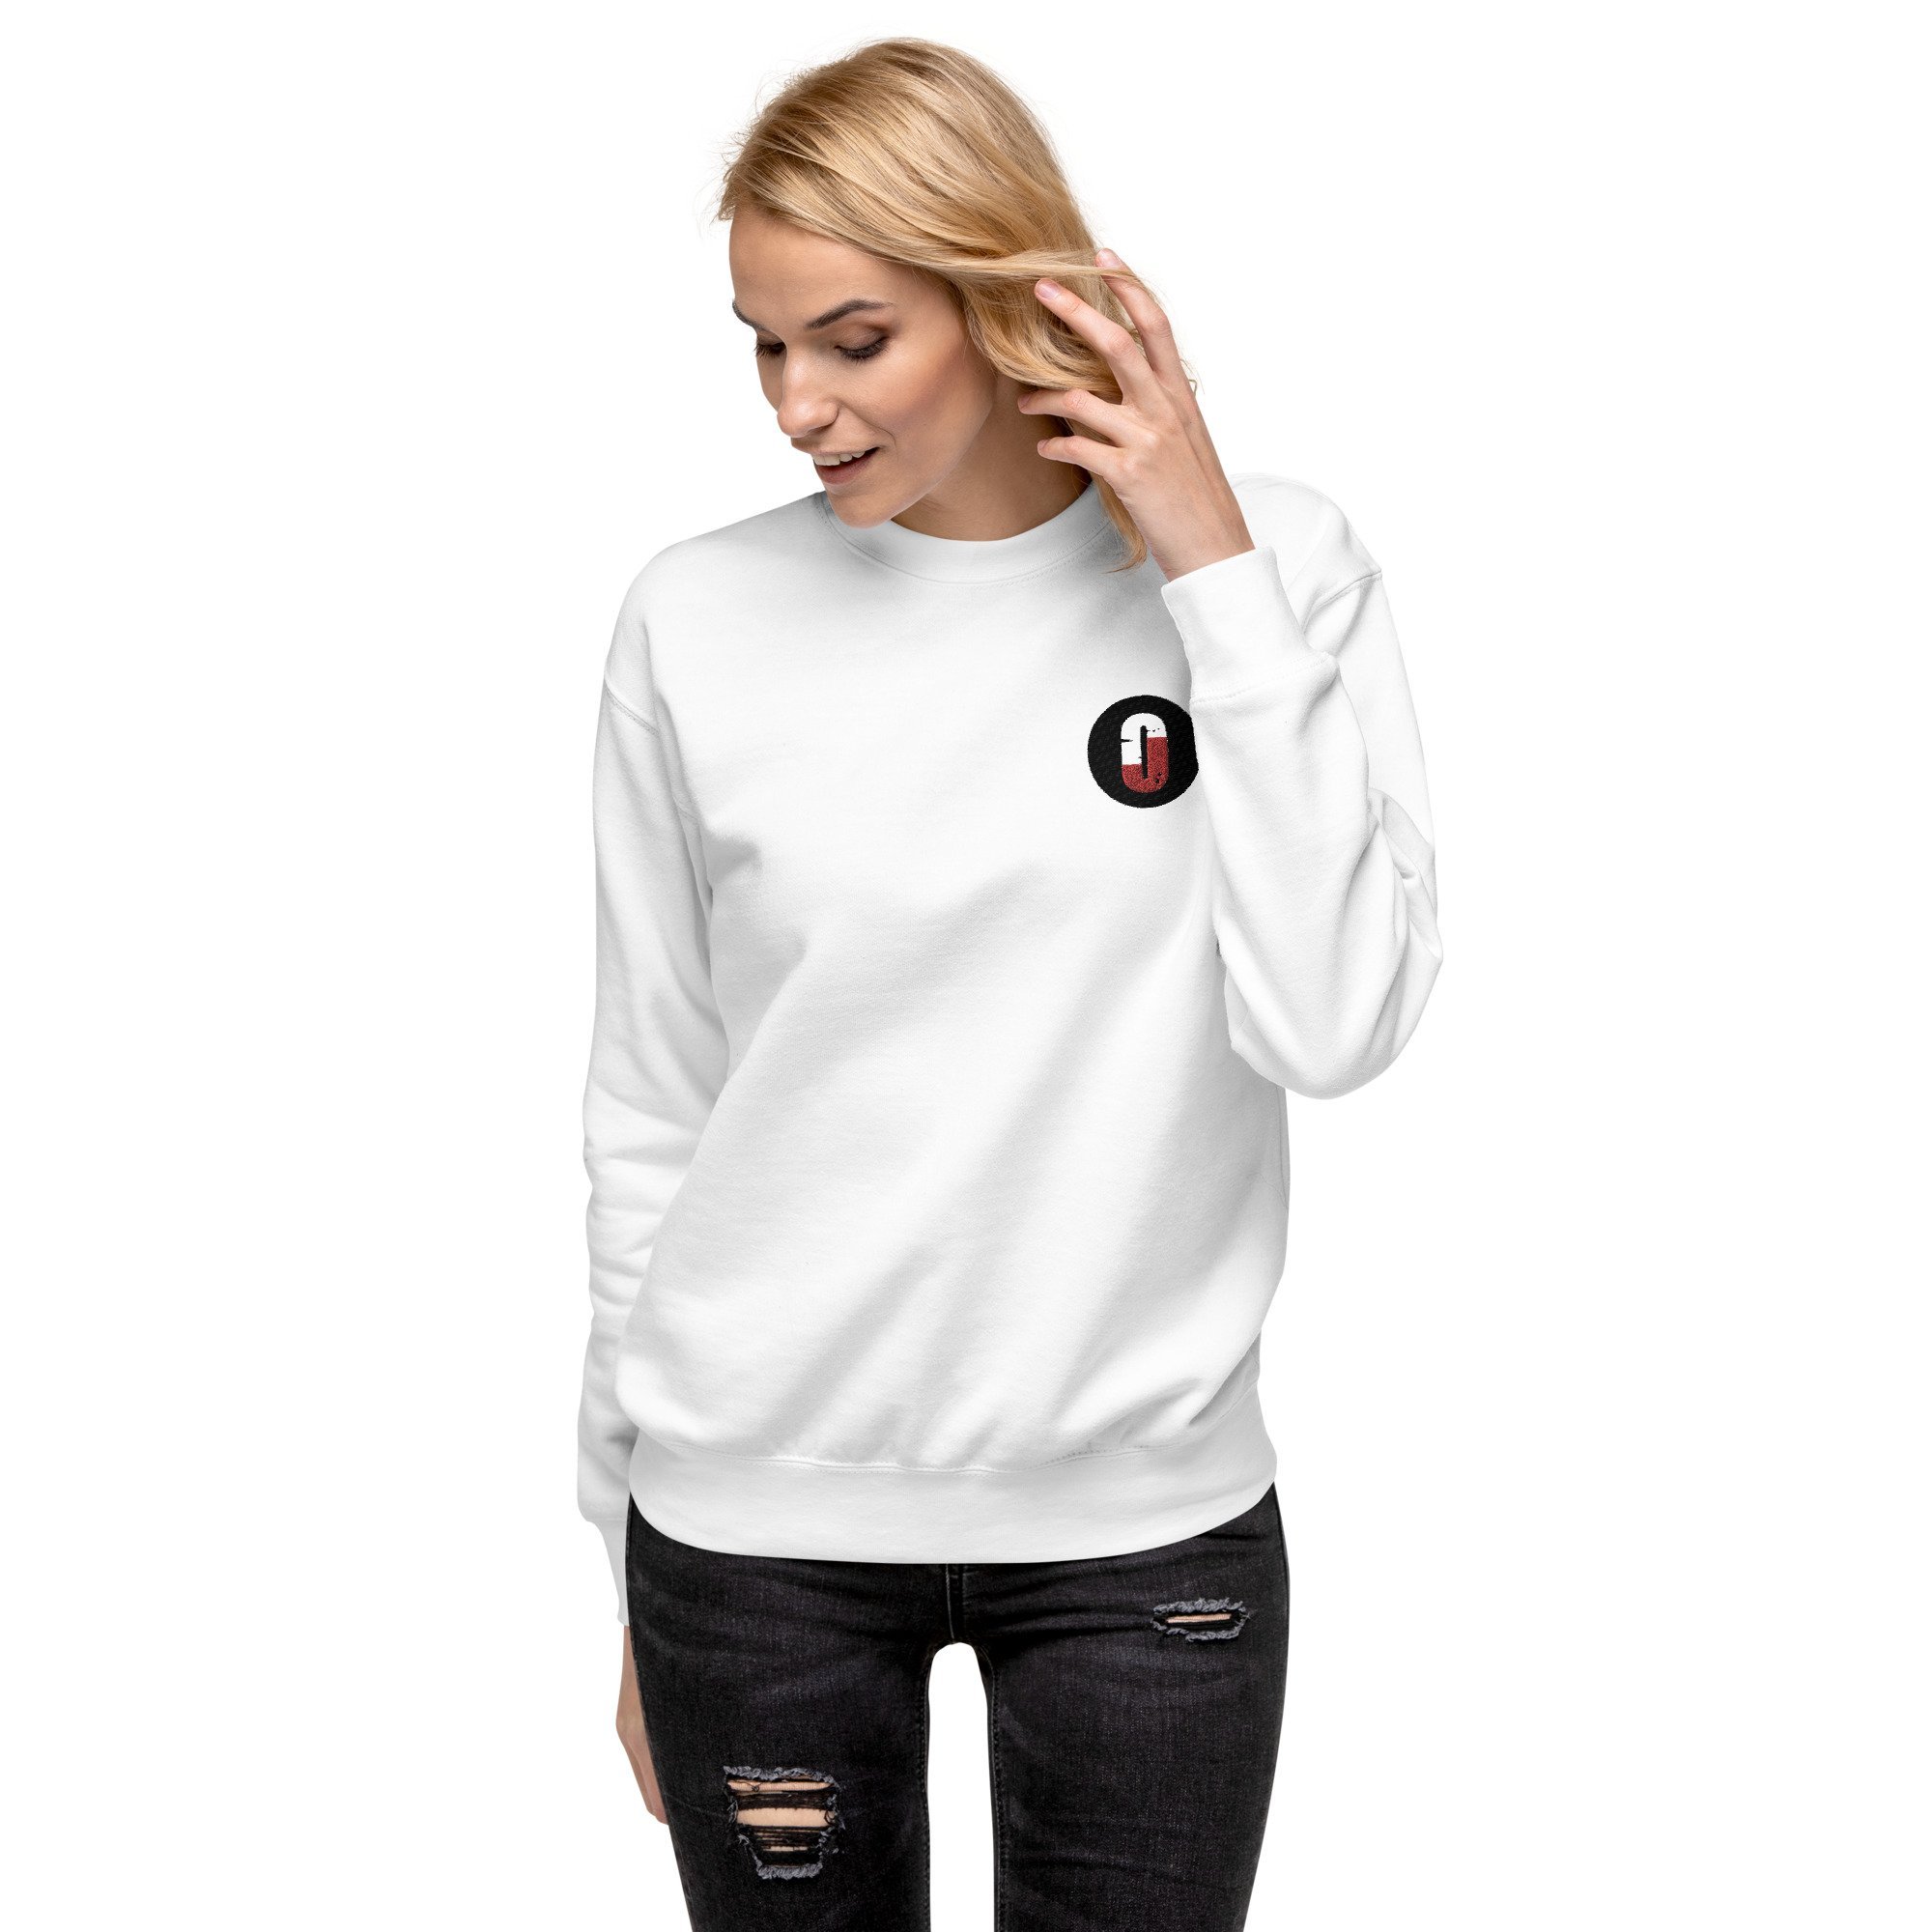 unisex-premium-sweatshirt-white-front-6361ea8ea9b93.jpg